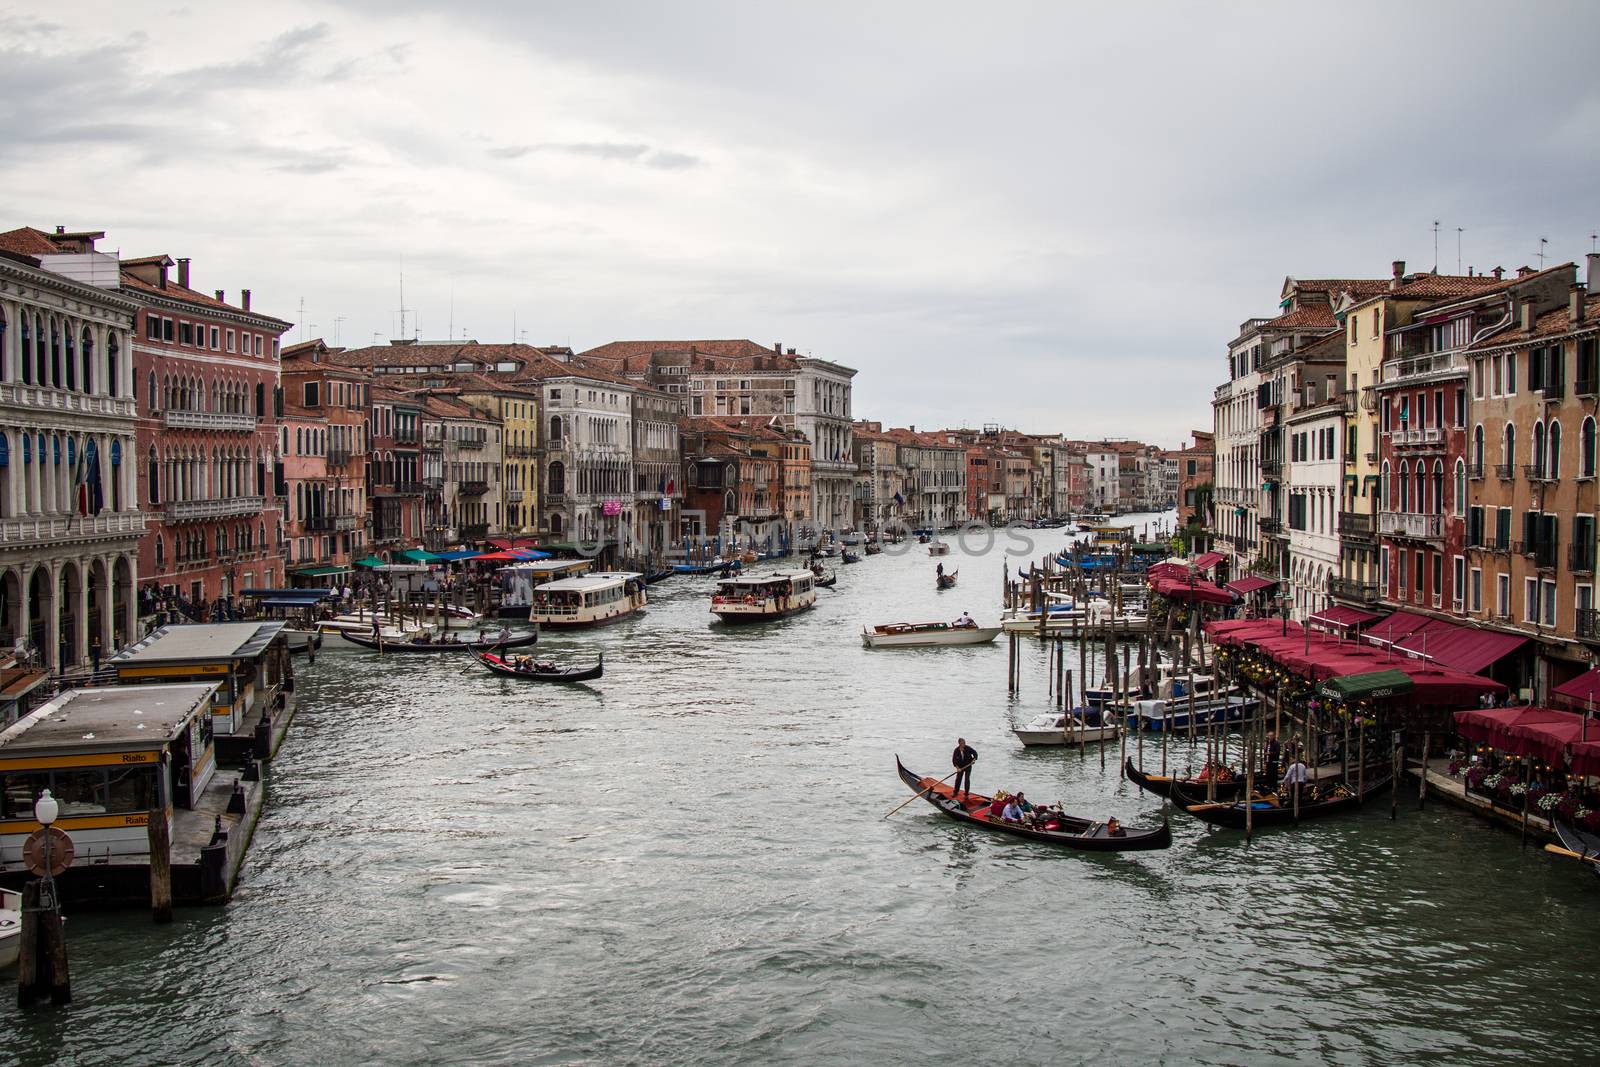 Venice Canal and Gondola by samULvisuals